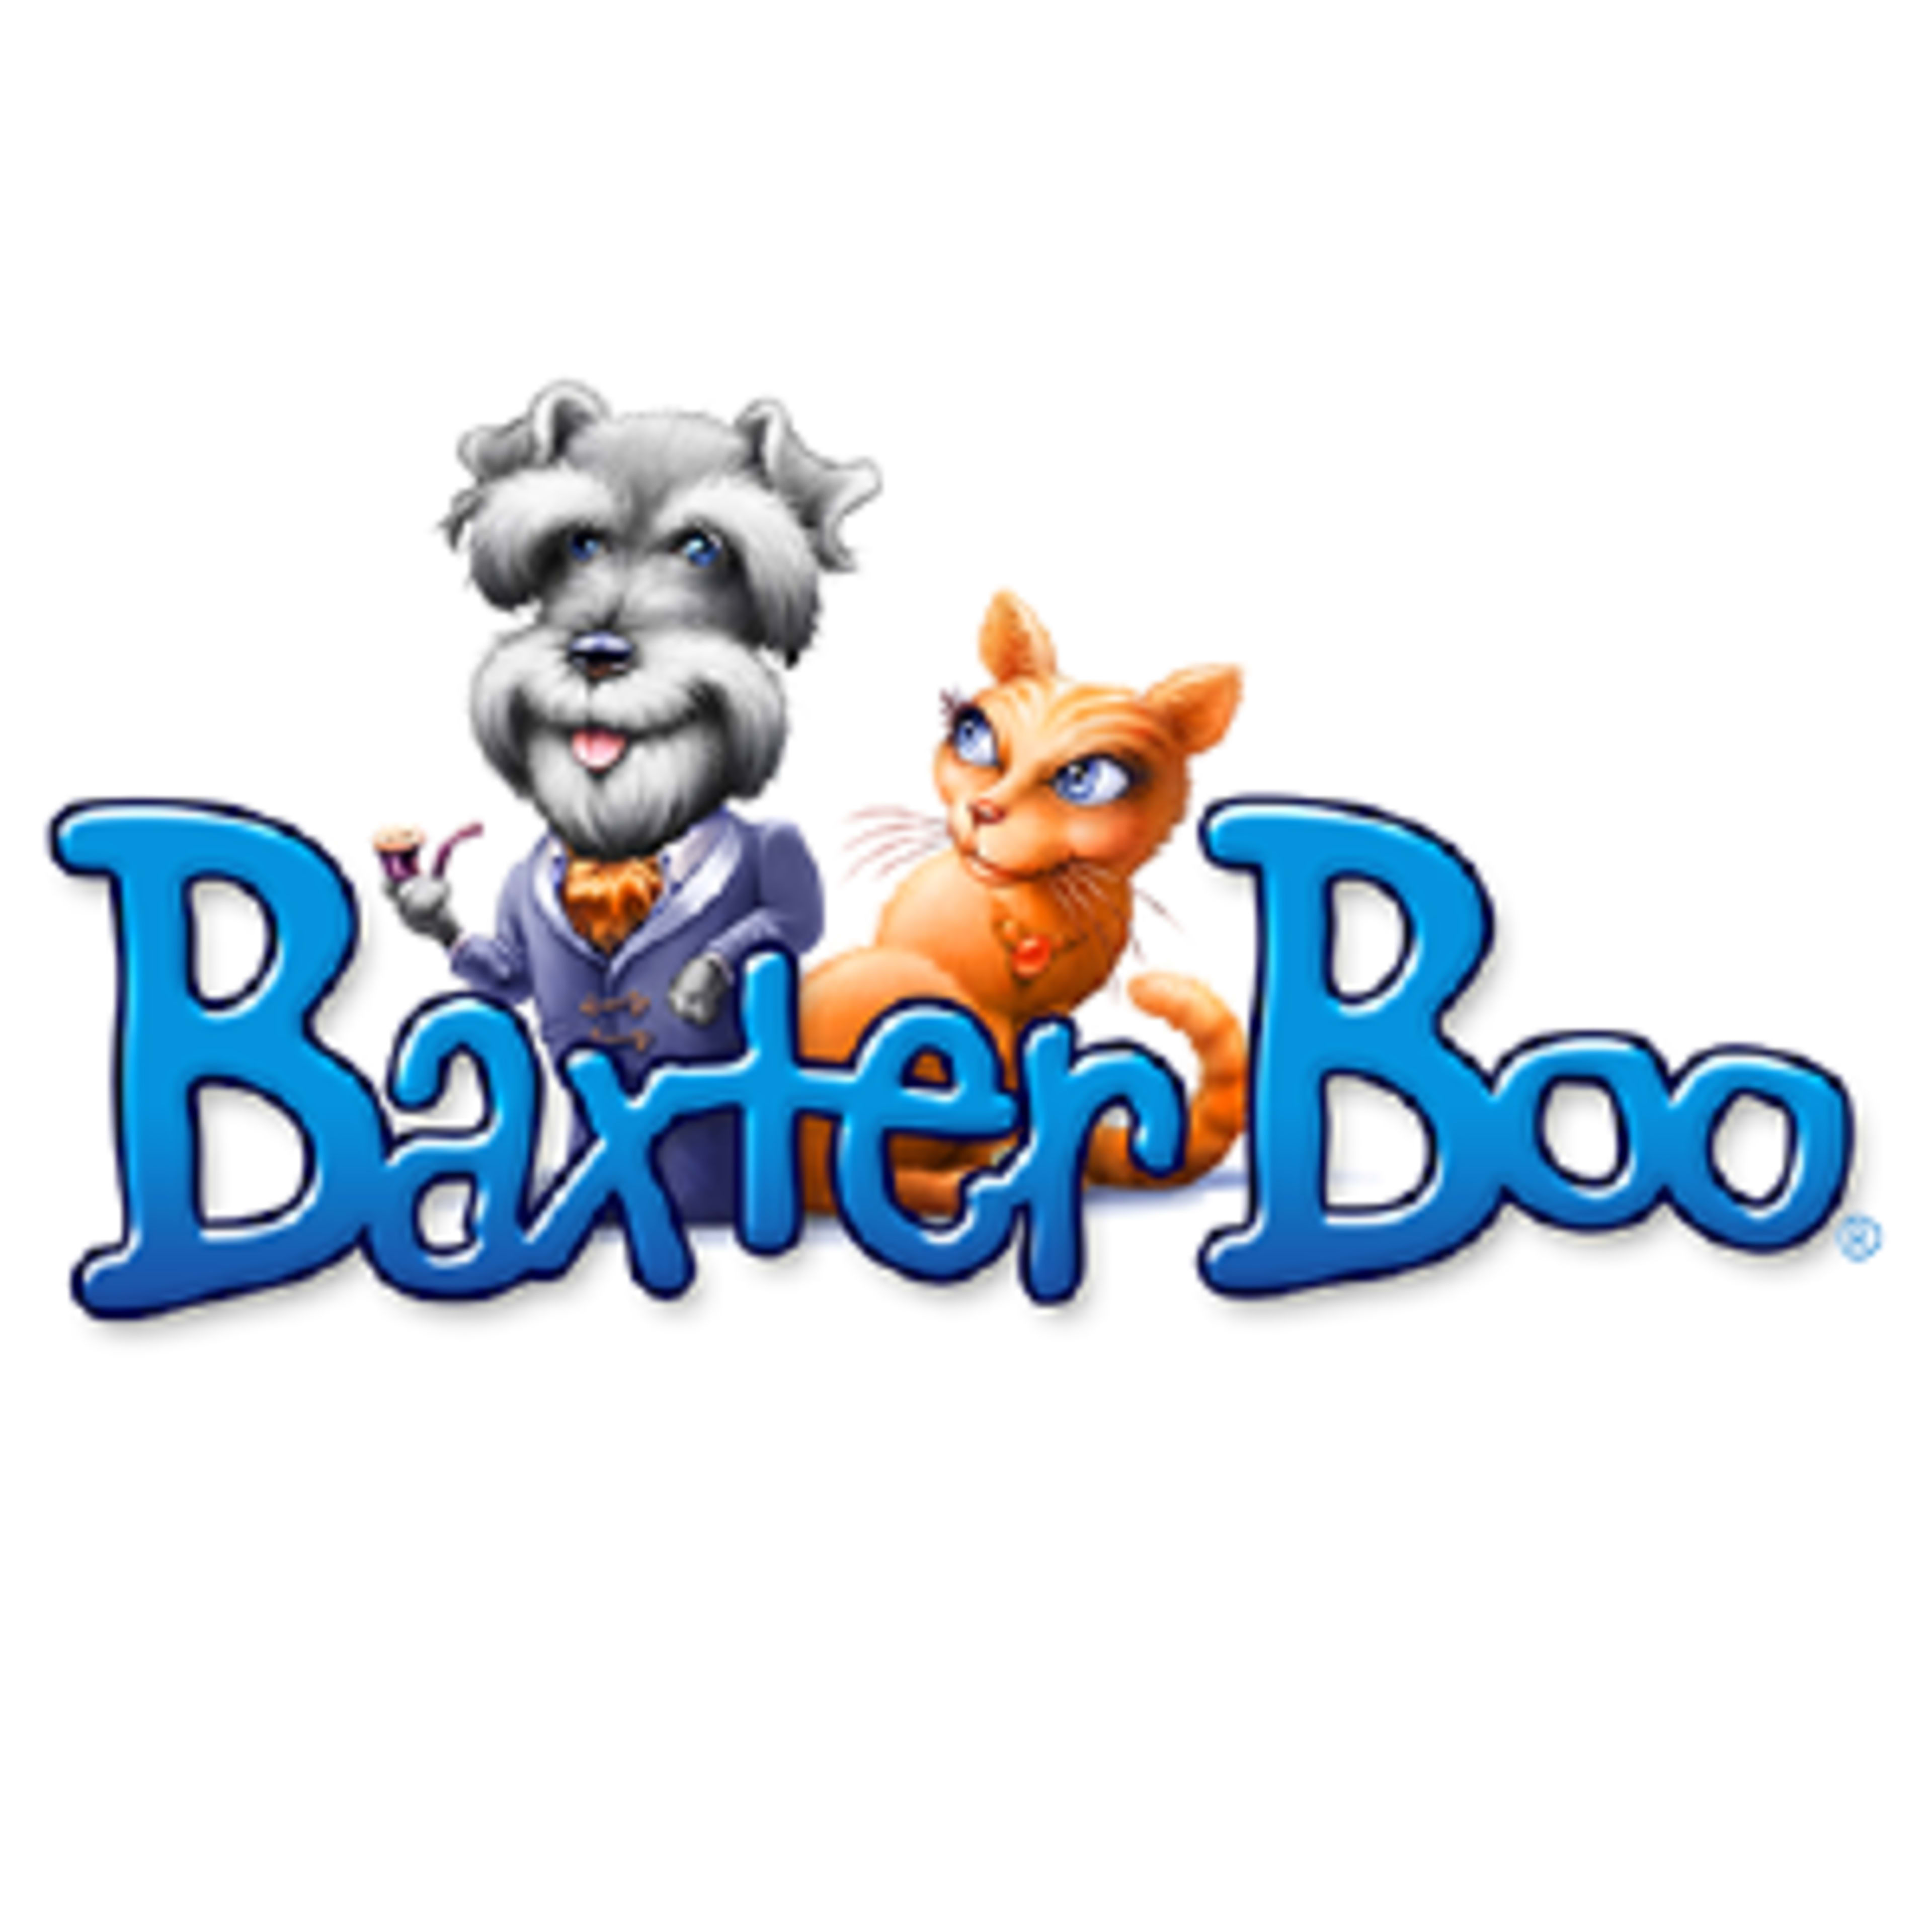 BaxterBoo Code